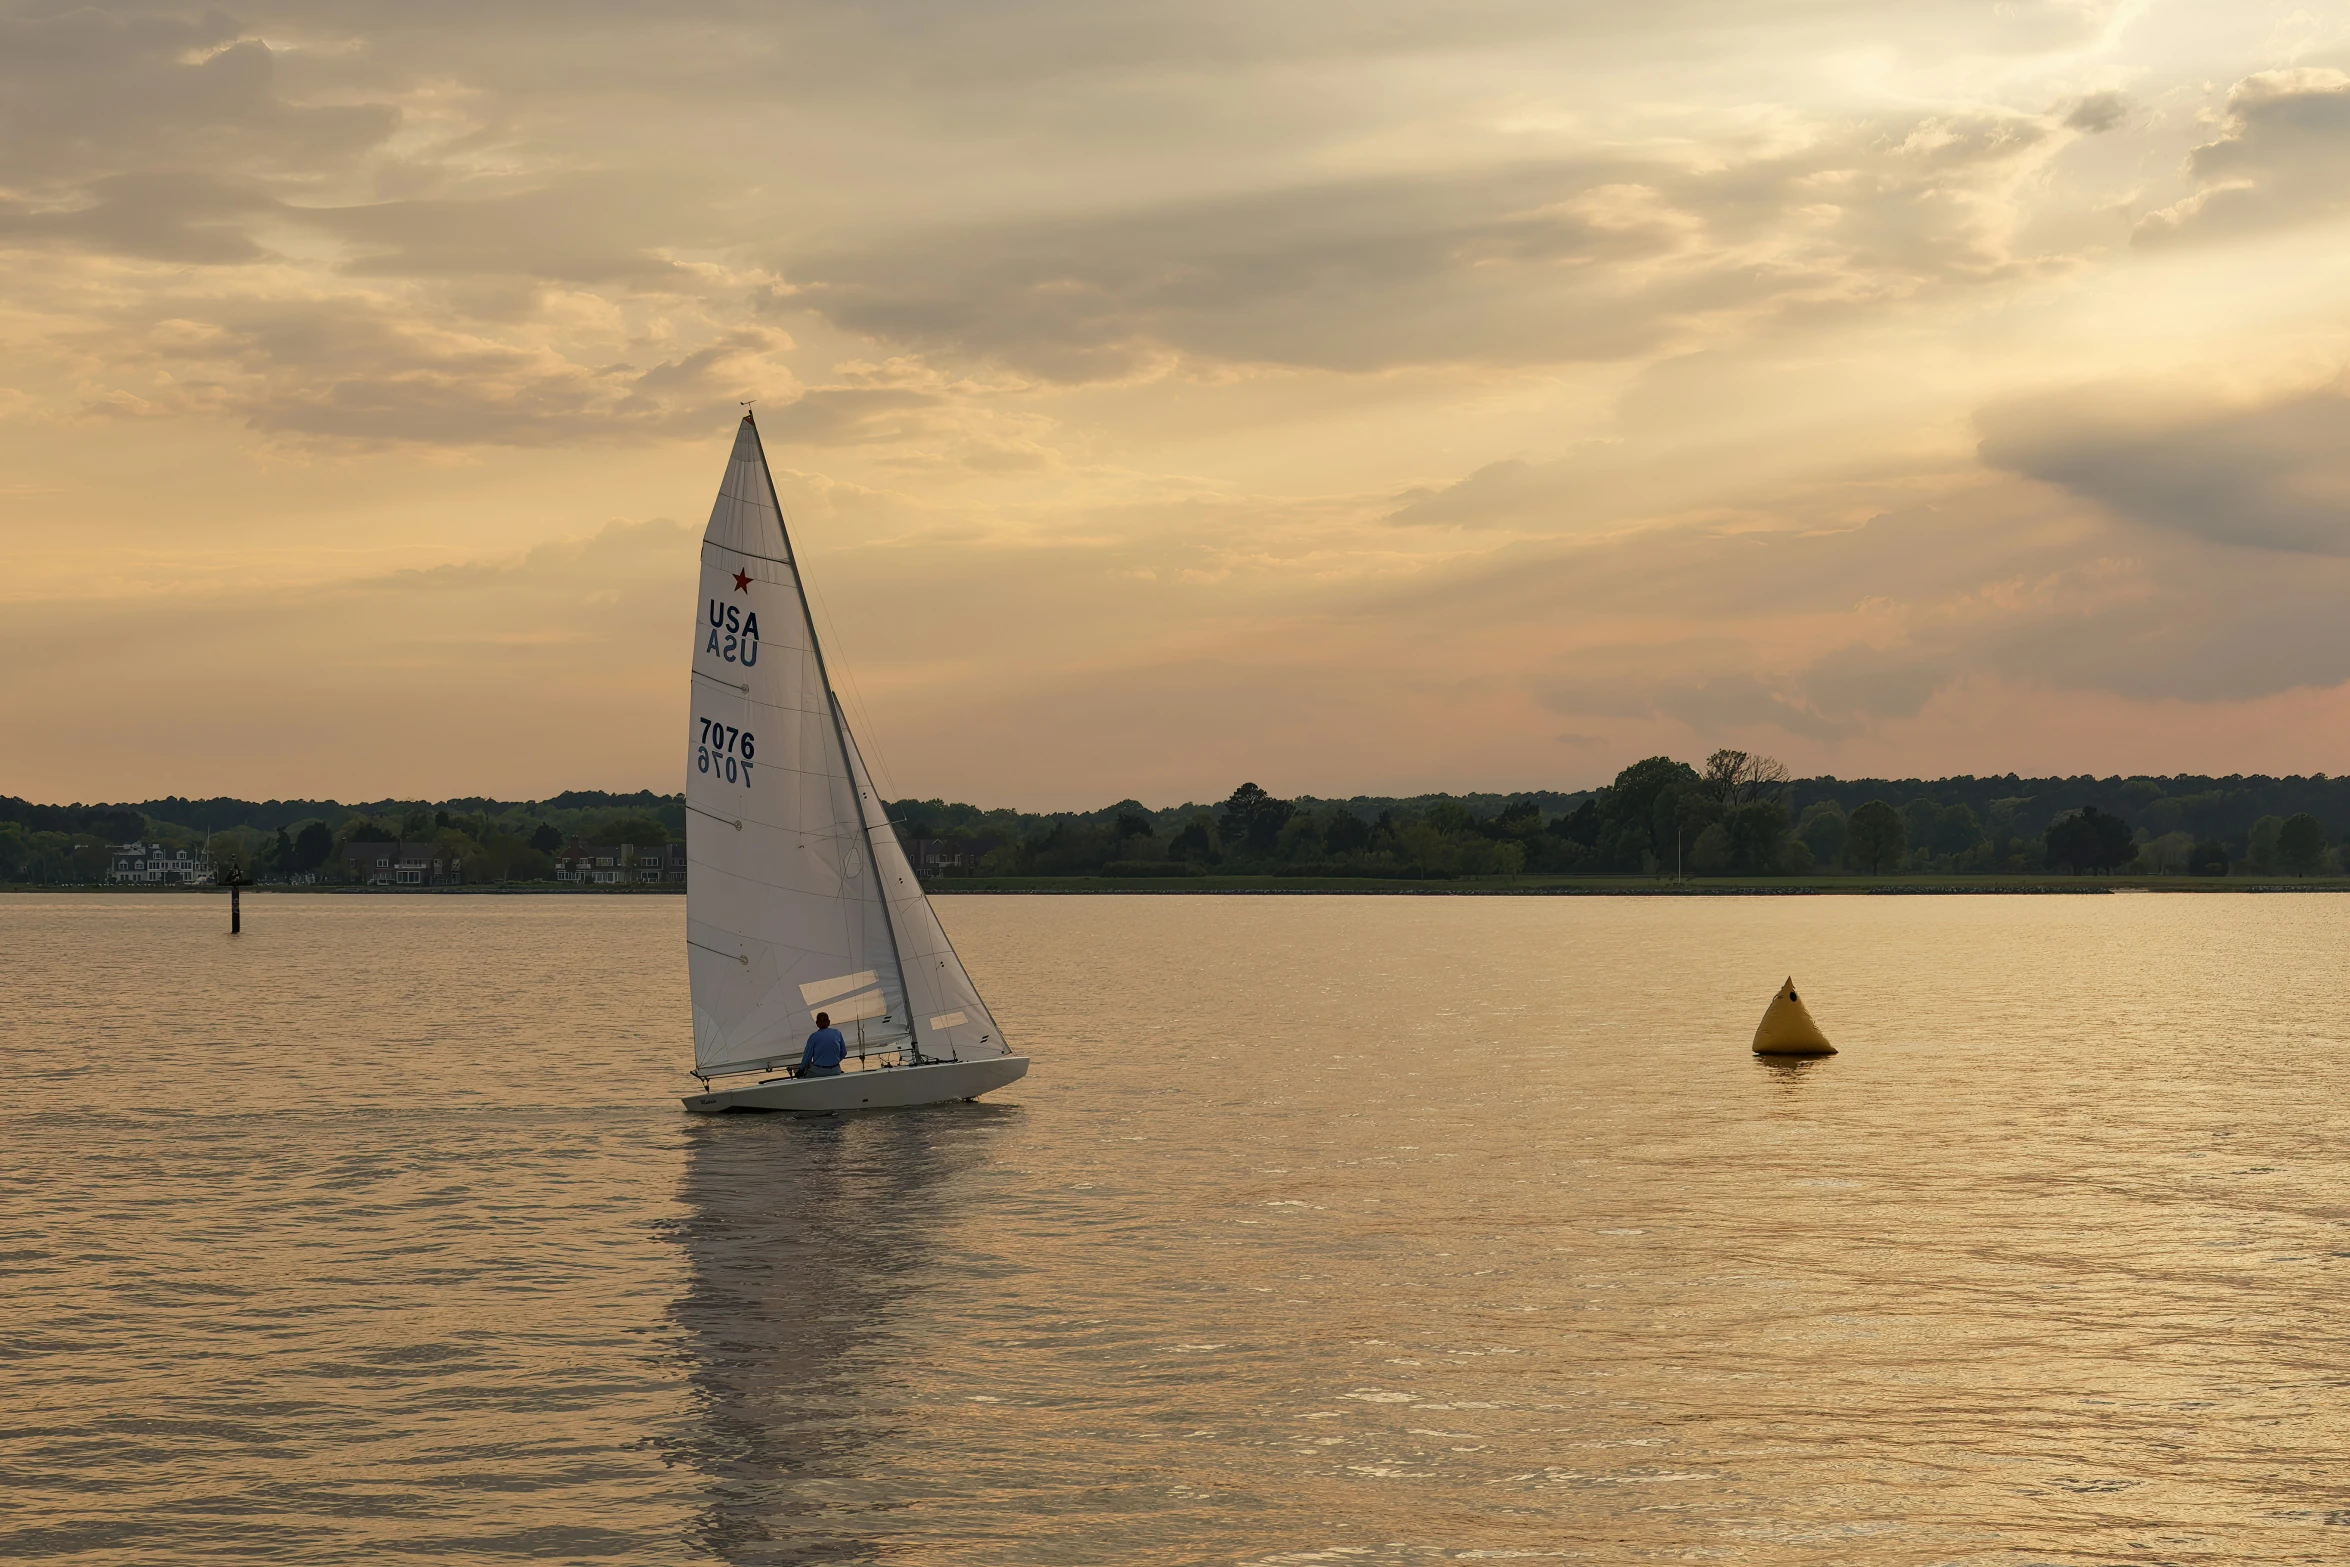 a sailboat sailing on the water at sunset